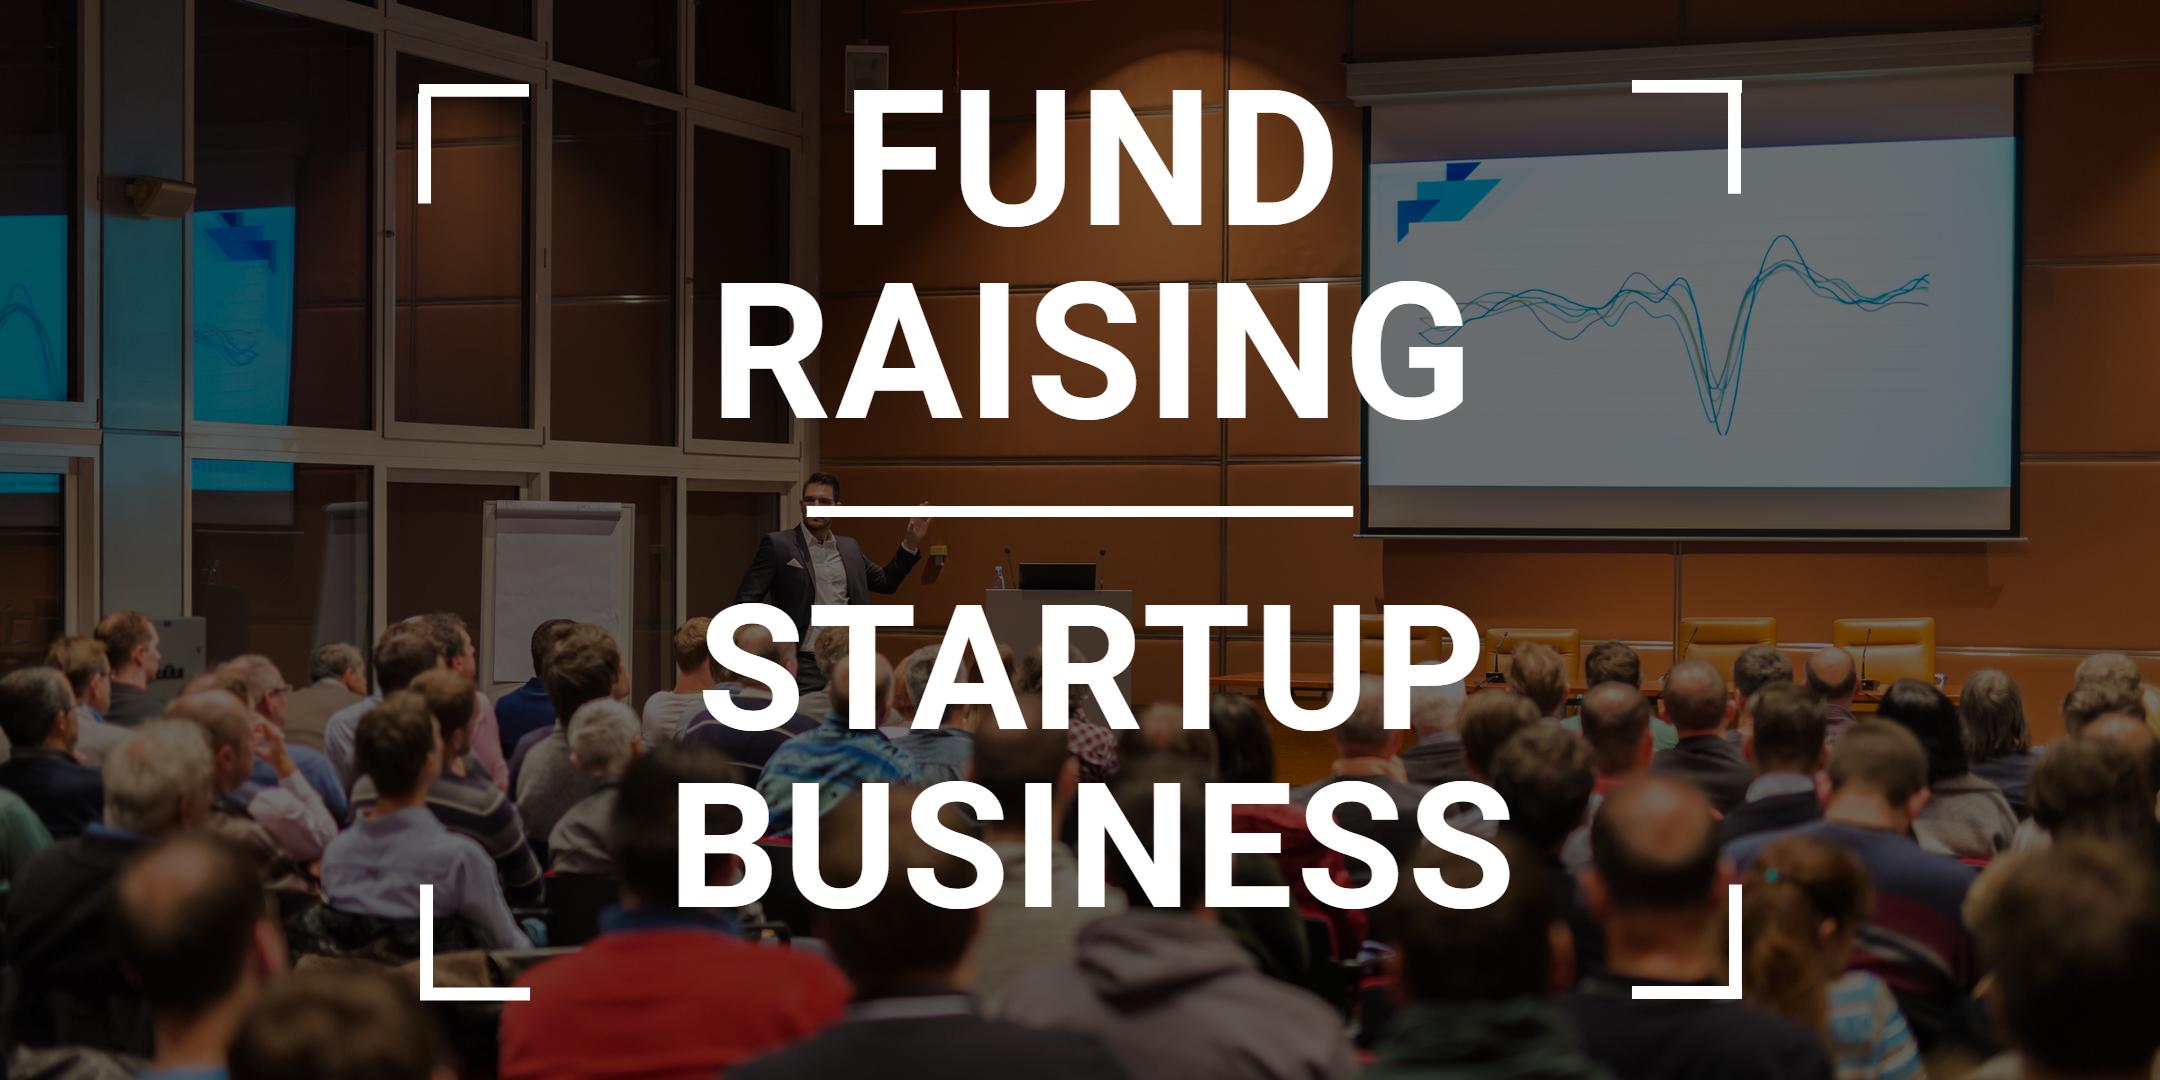 [Startups] : Fund Raising for Startup Business